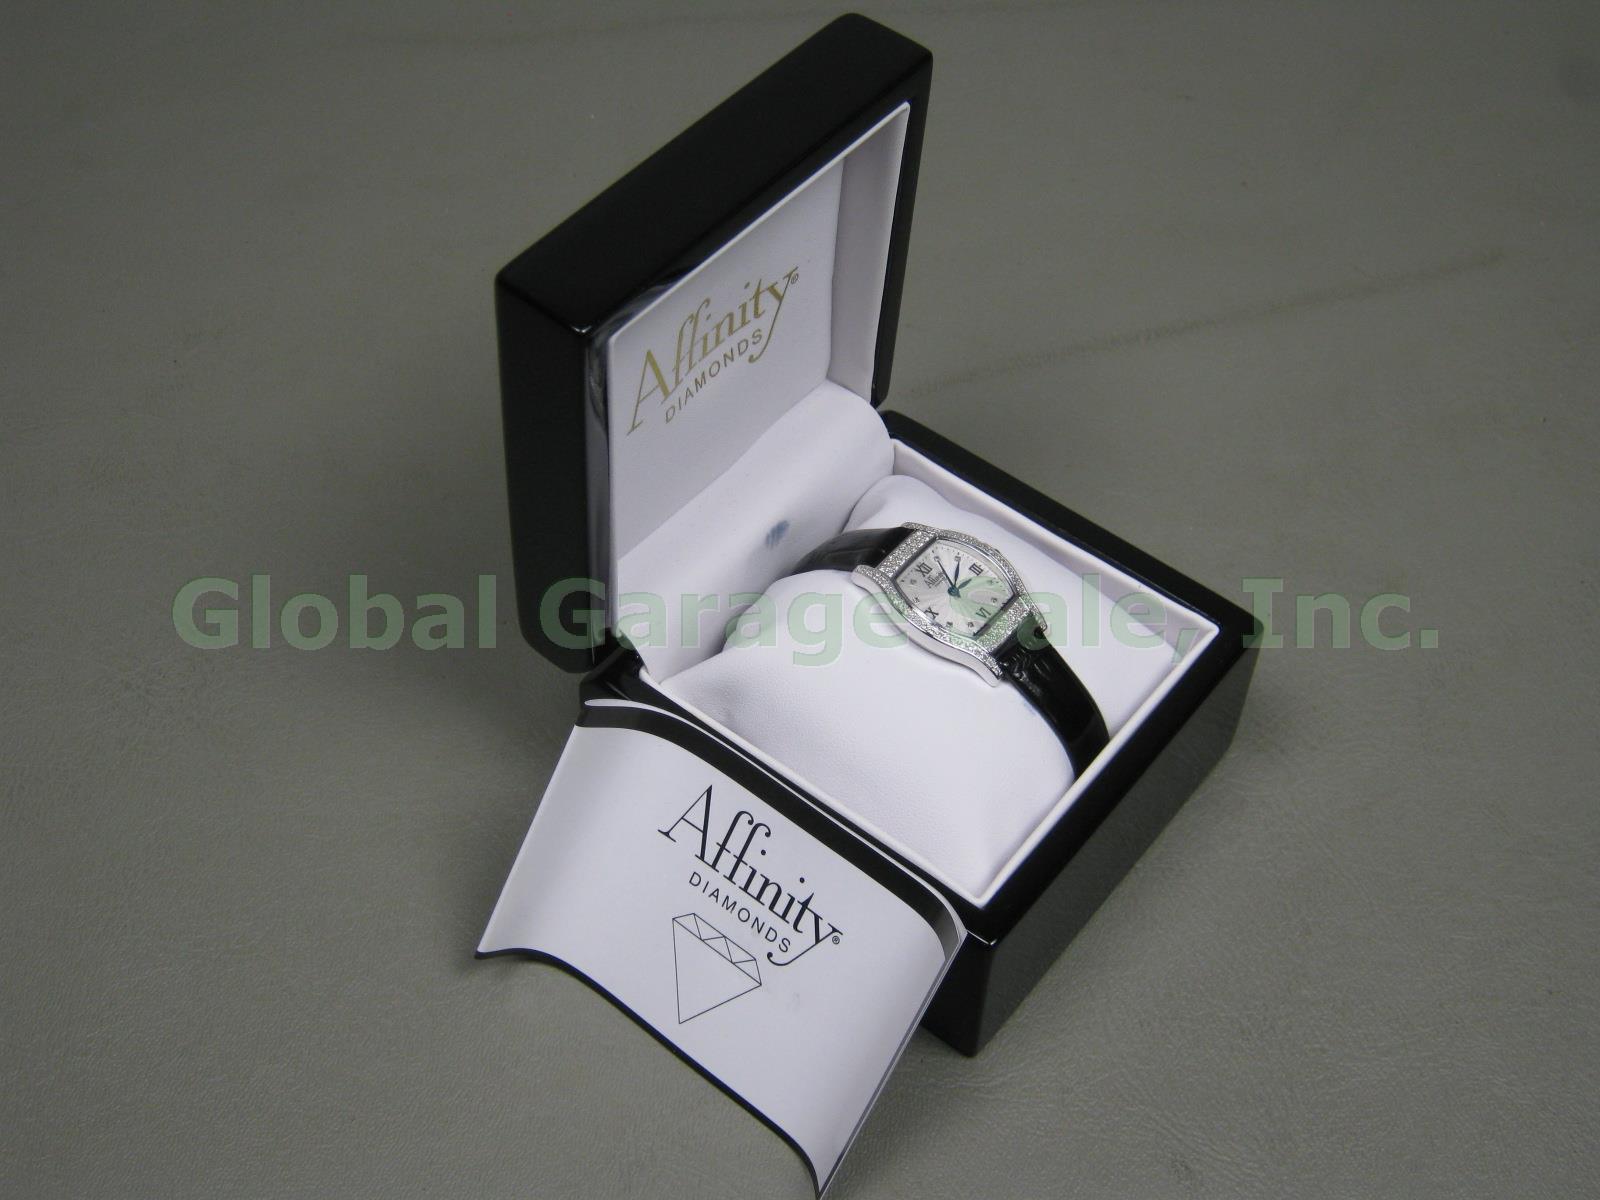 New QVC Affinity Diamond 4/10 ct tw Sterling Silver Watch W/Swiss Movement J8105